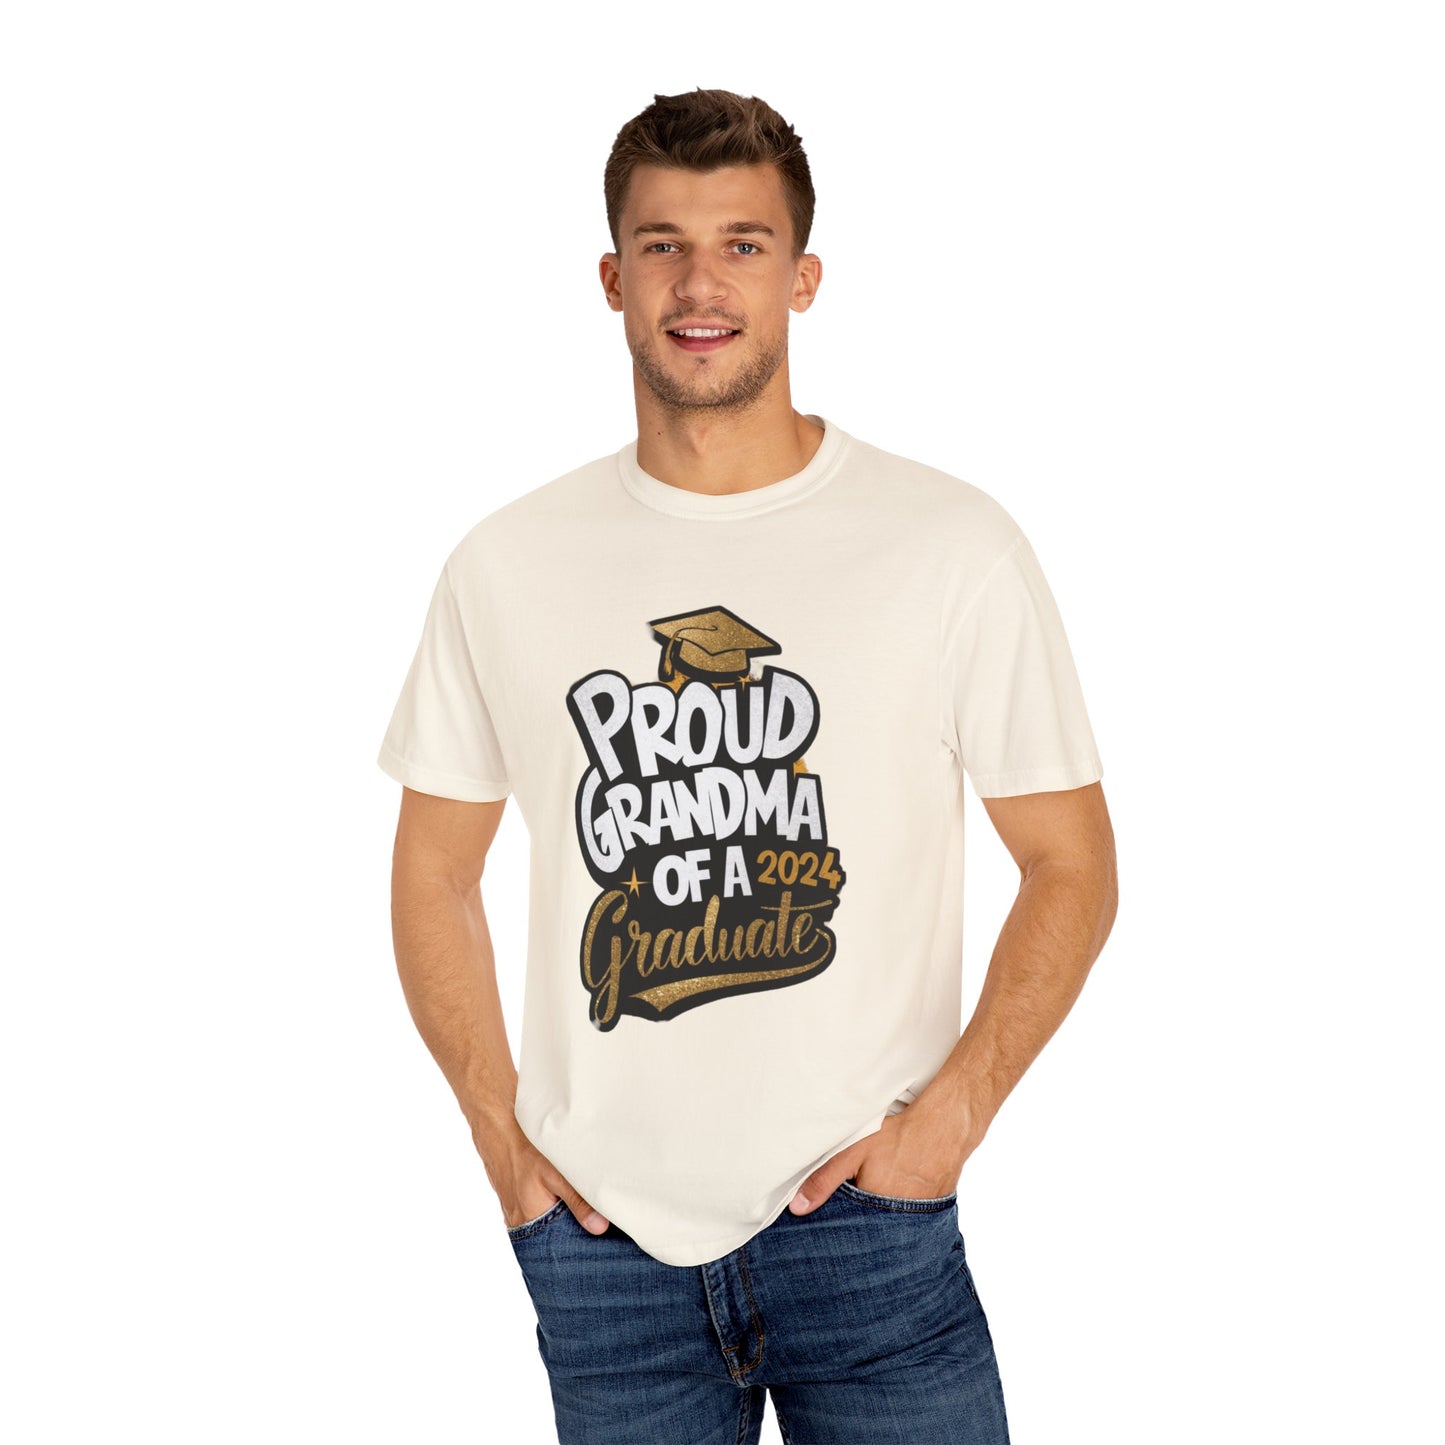 Proud of Grandma 2024 Graduate Unisex Garment-dyed T-shirt Cotton Funny Humorous Graphic Soft Premium Unisex Men Women Ivory T-shirt Birthday Gift-45